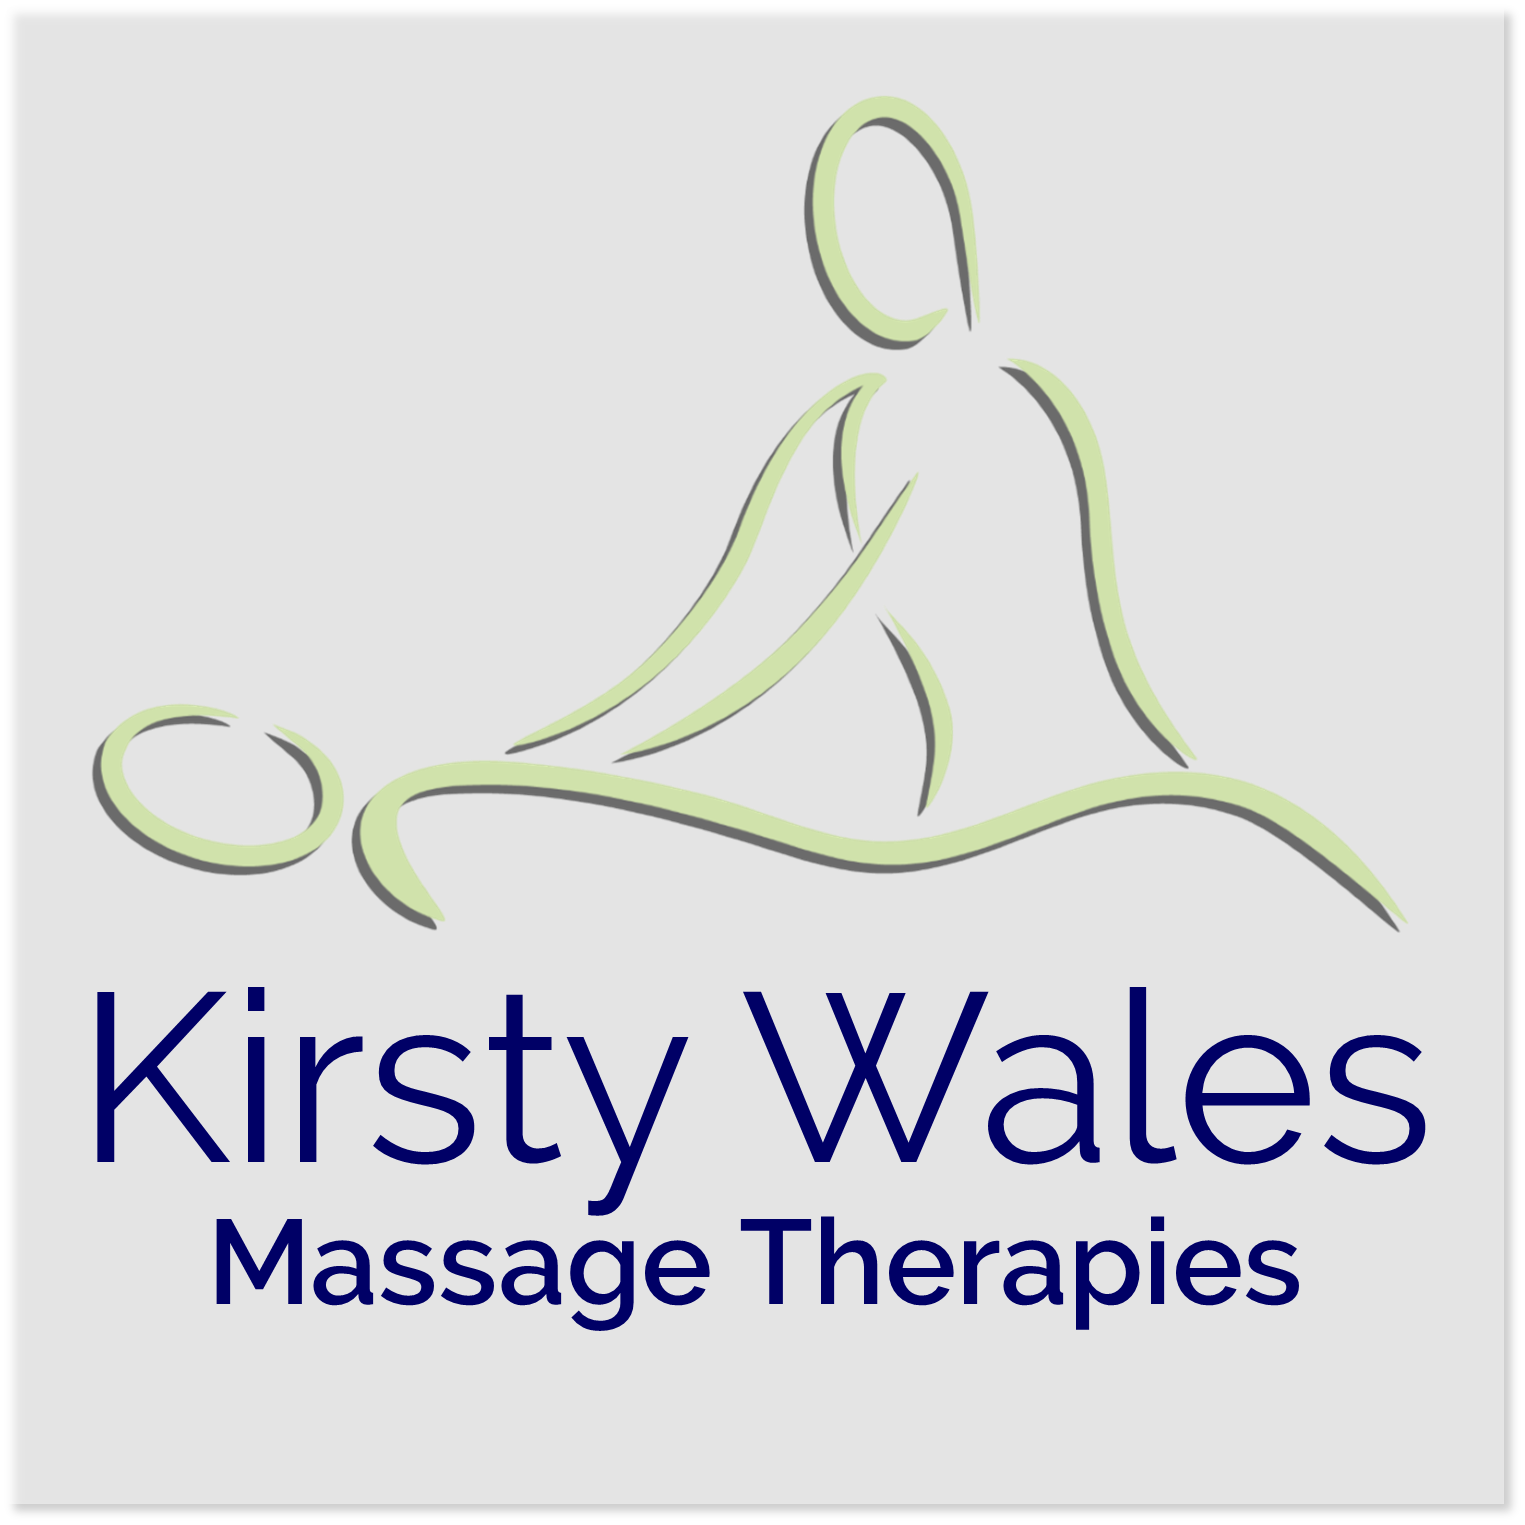 Kirsty Wales Massage Therapies.